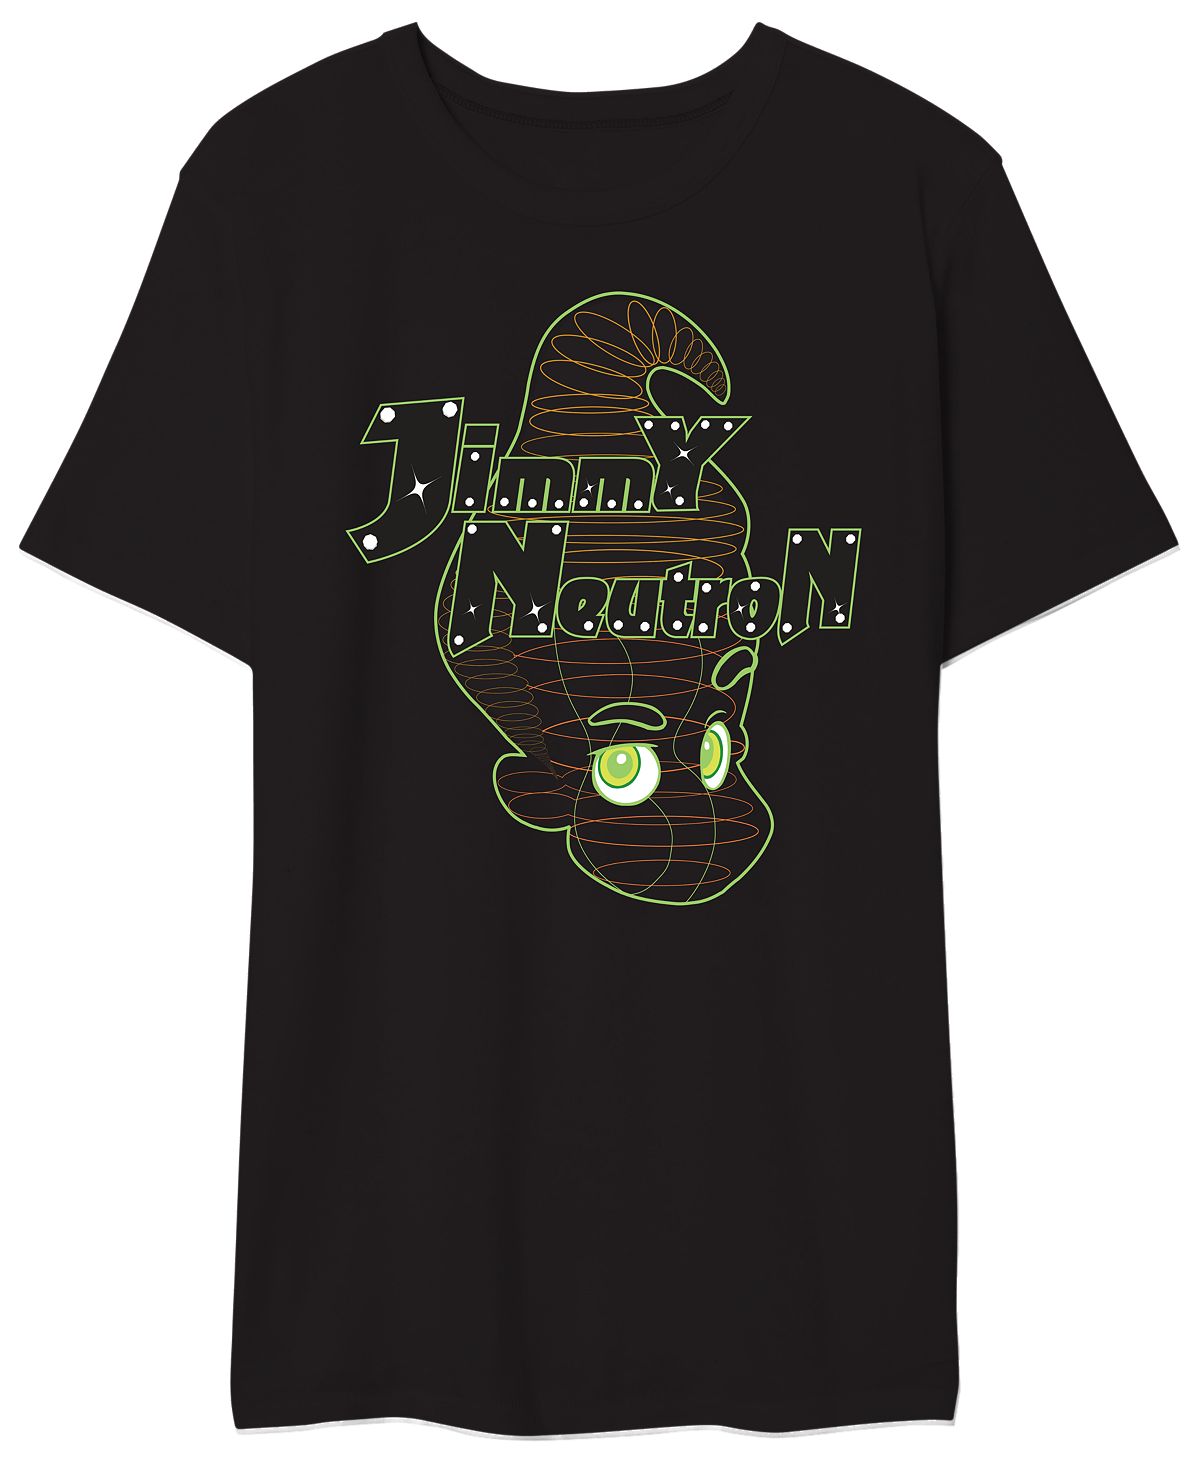 Мужская футболка с рисунком jimmy neutron AIRWAVES, мульти neutron a4 plus